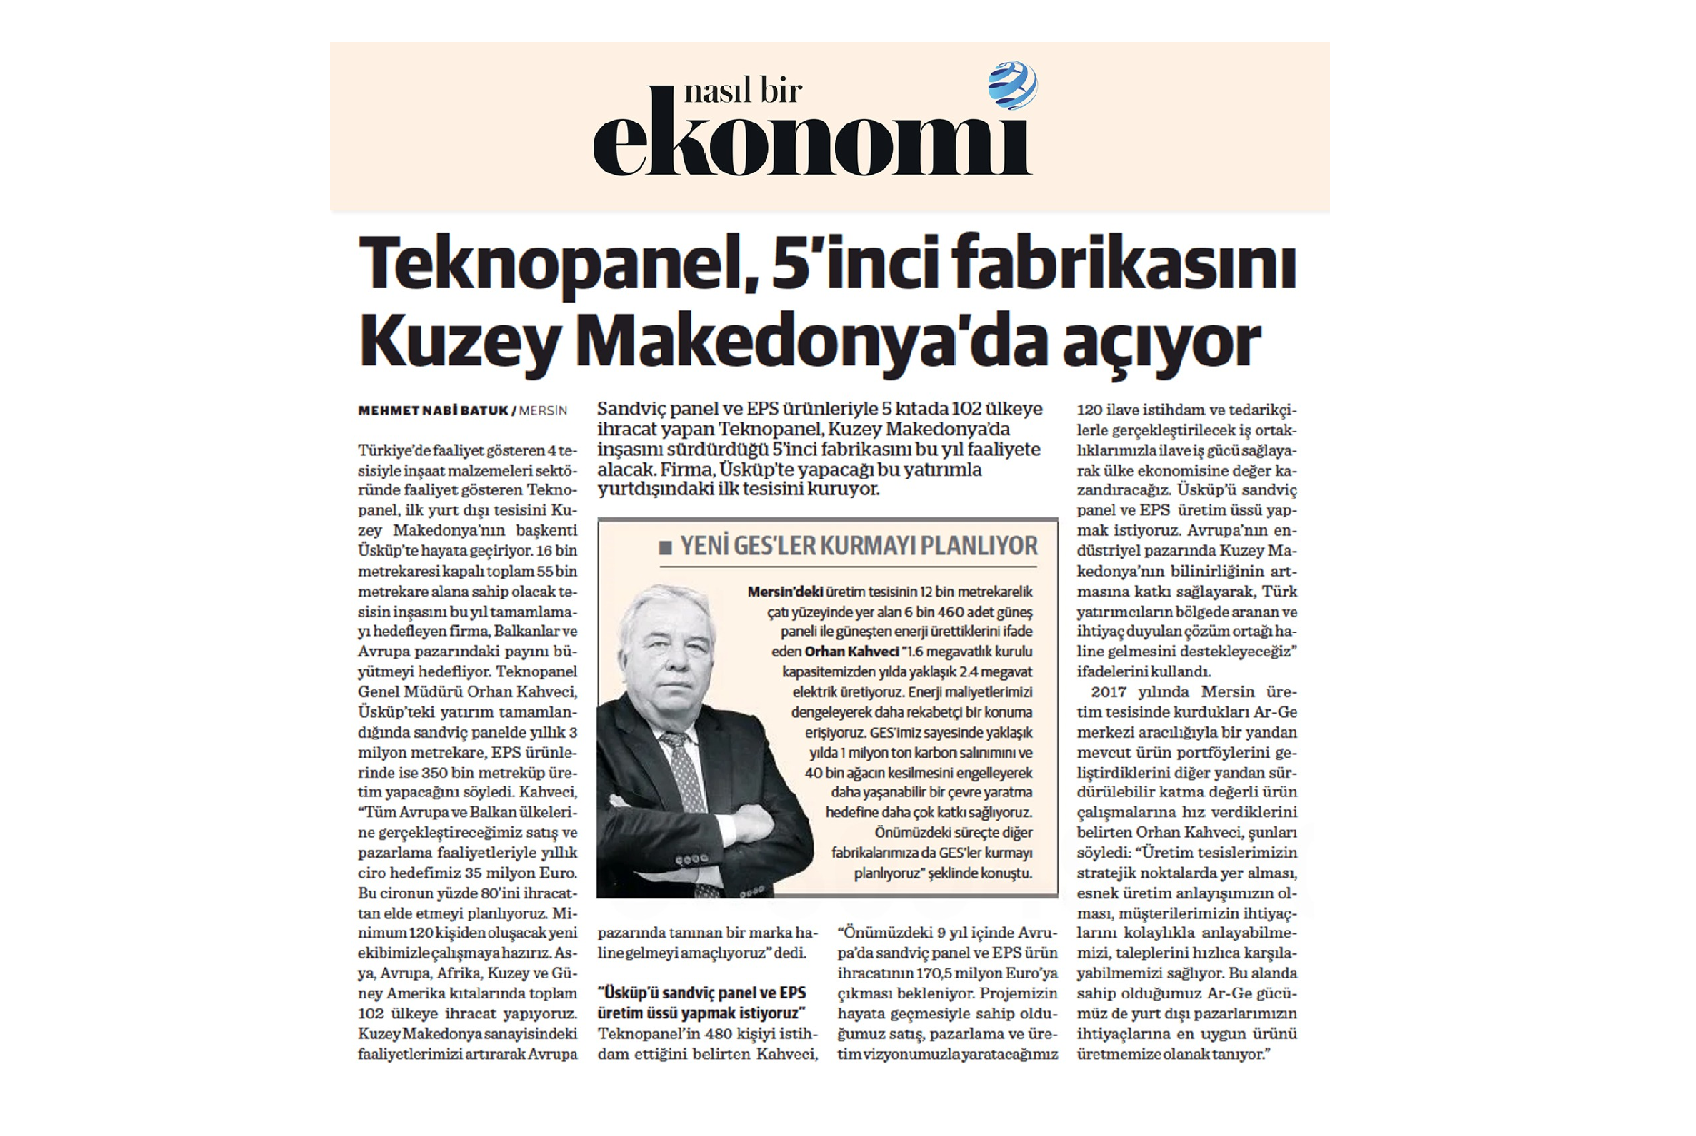 Nasıl Bir Ekonomi: ''Teknopanel opens its 5th factory in North Macedonia''